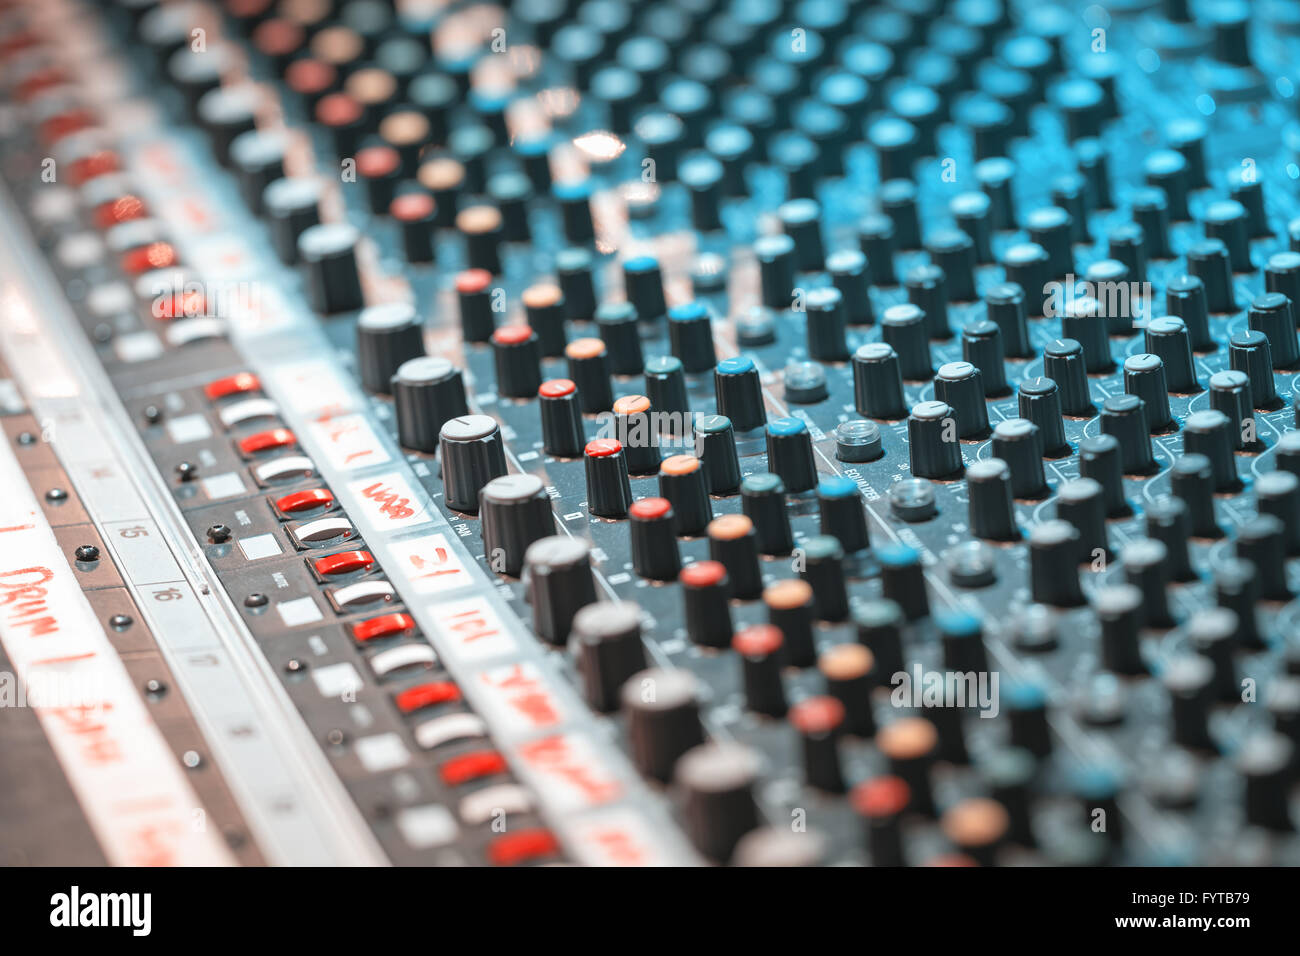 Ausrüstung der Tonaufnahme. Musik-Mixer-Parameter Stockfoto